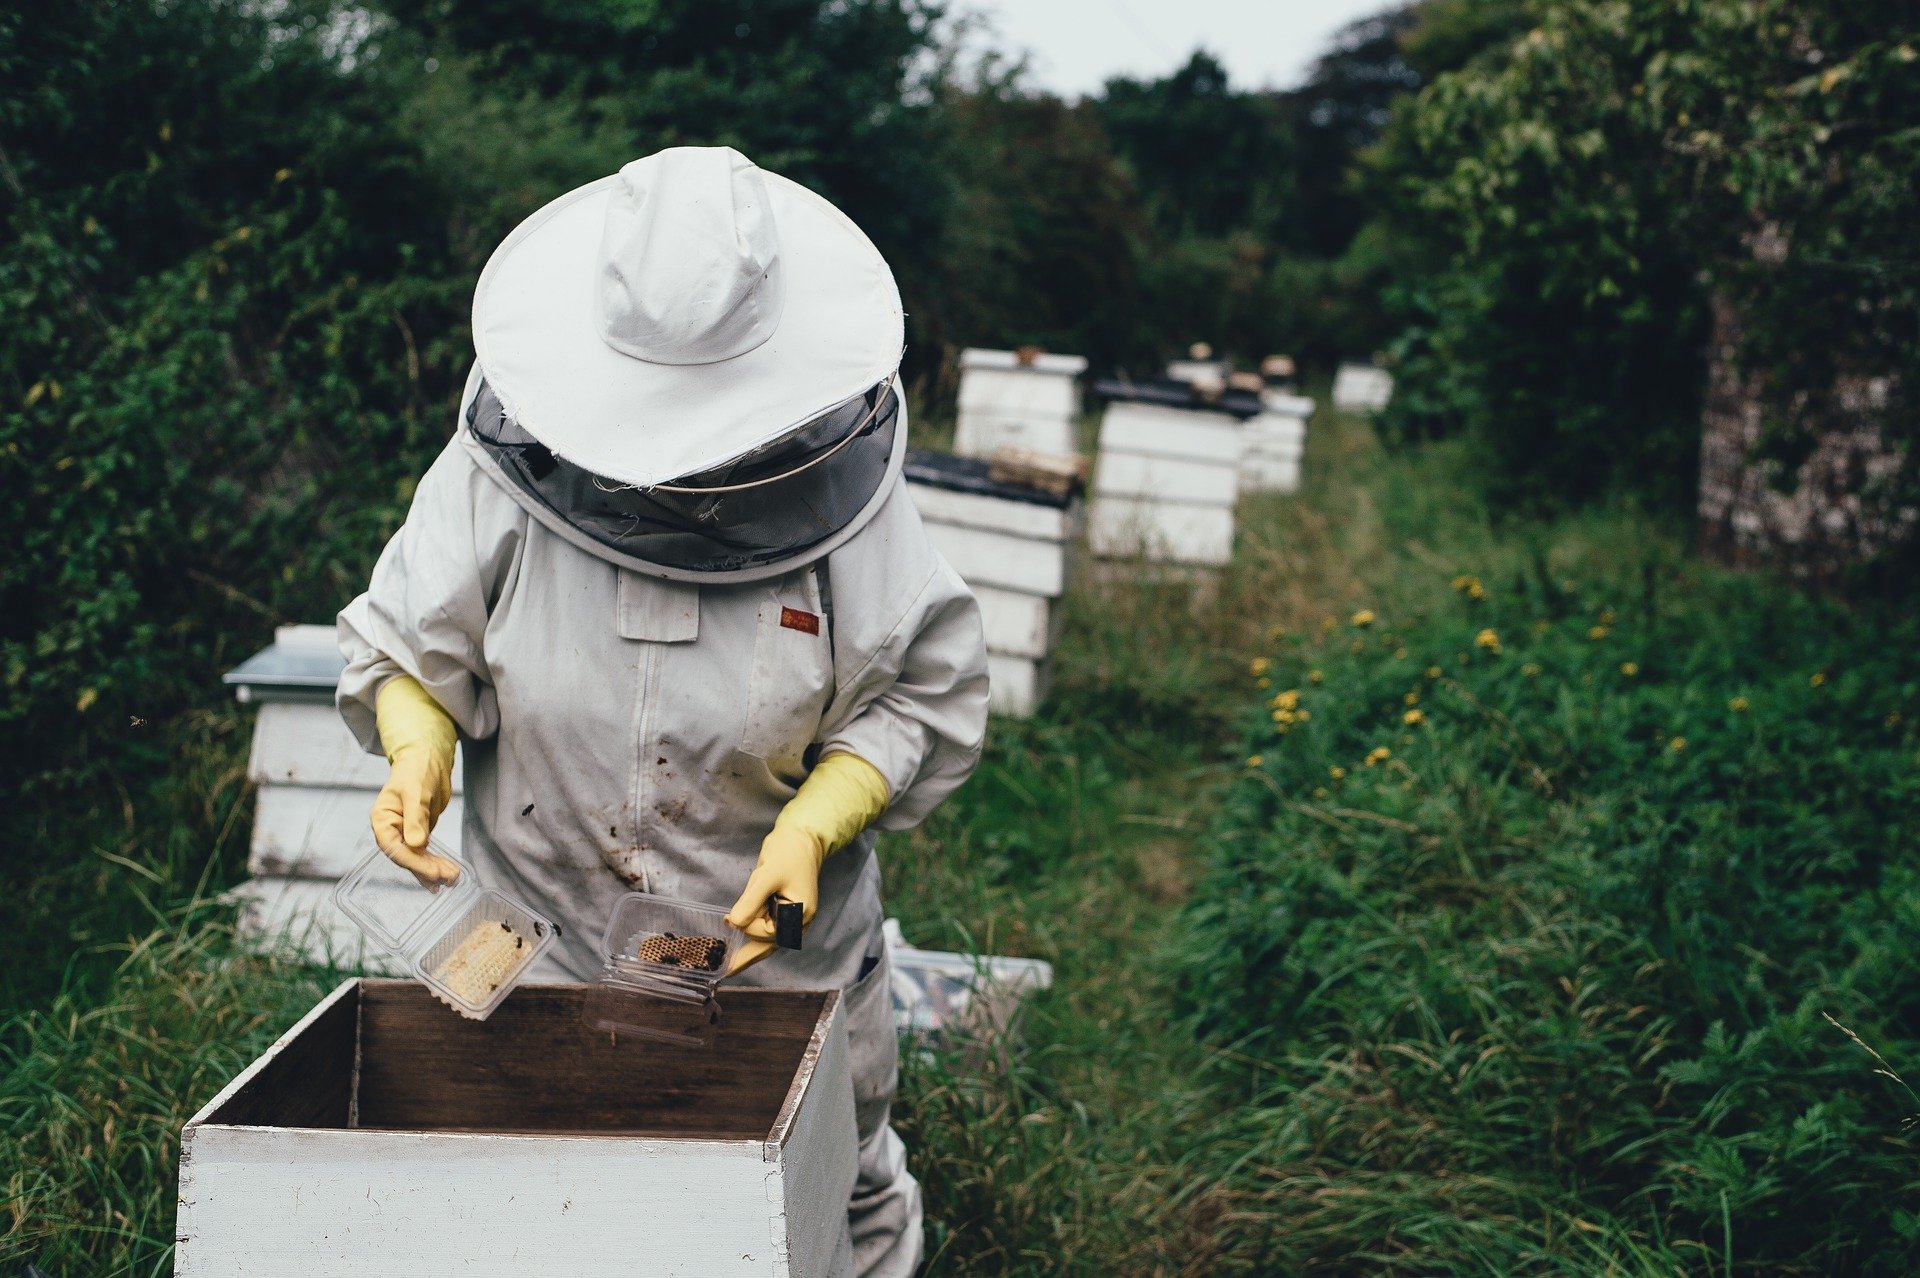 Beekeeper tending to a hive.